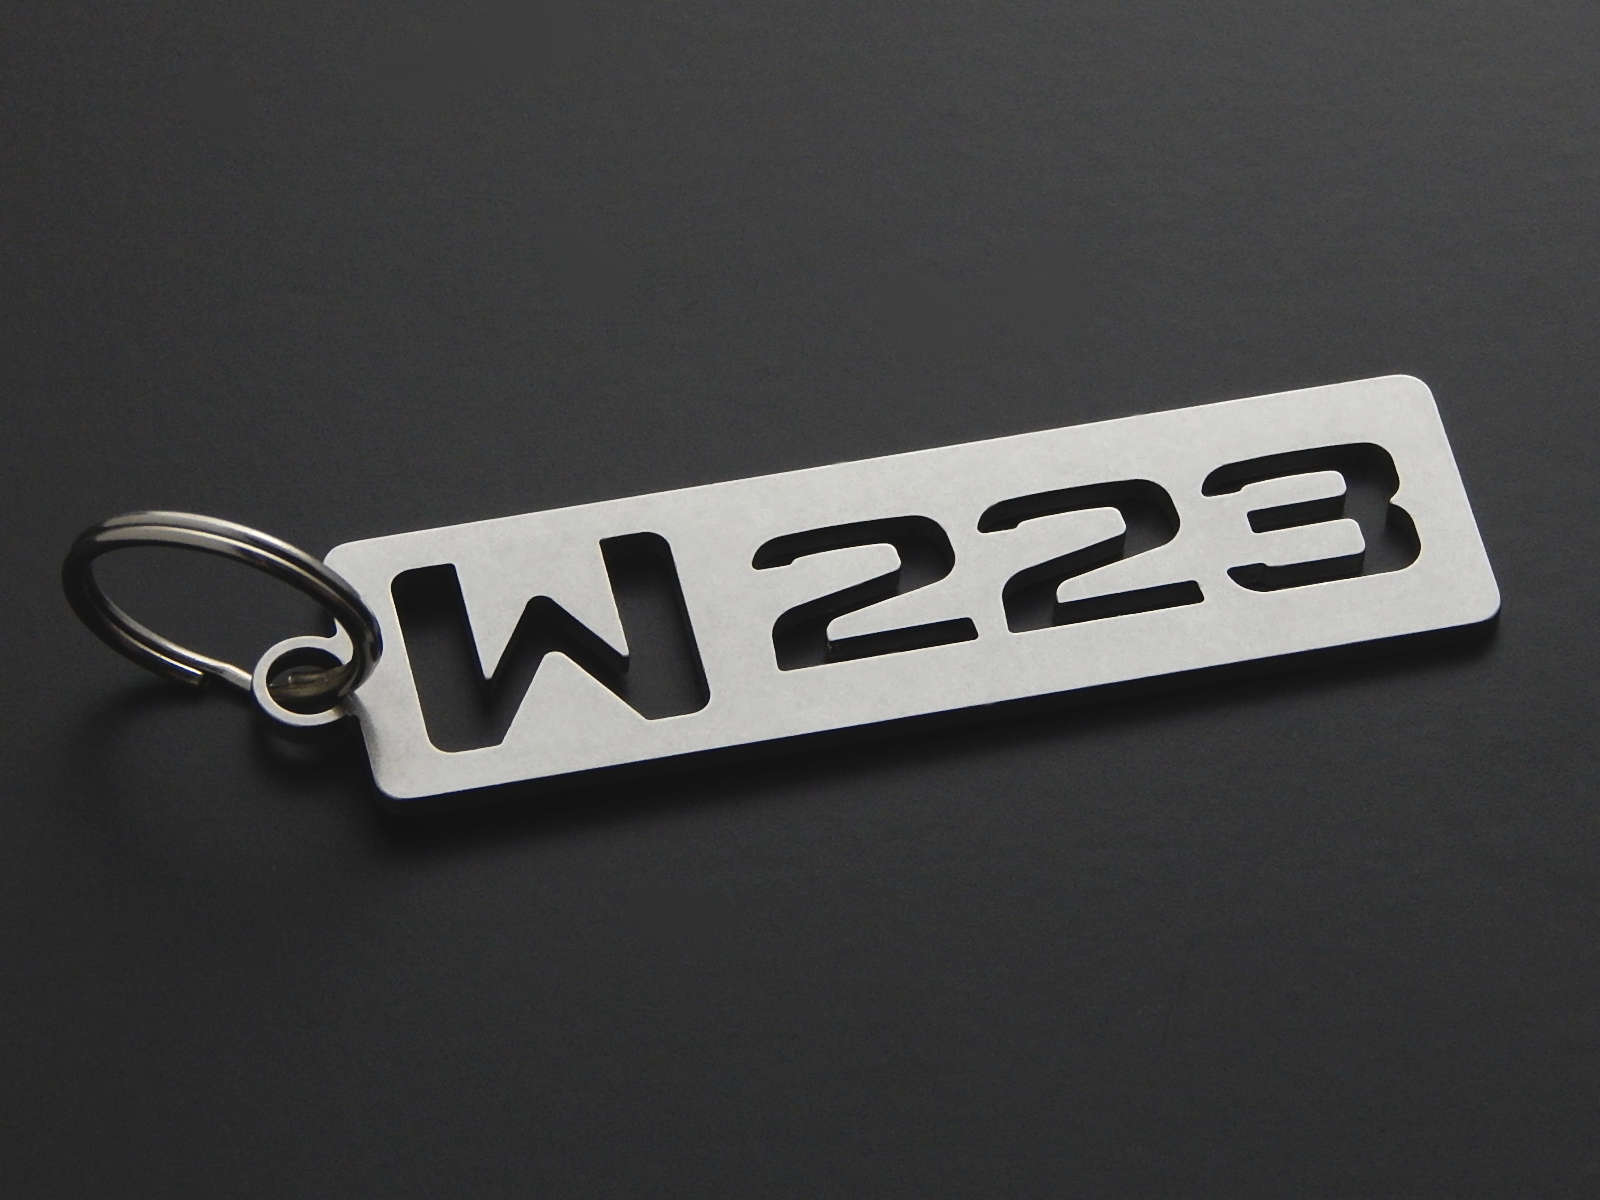 W223 DisagrEE